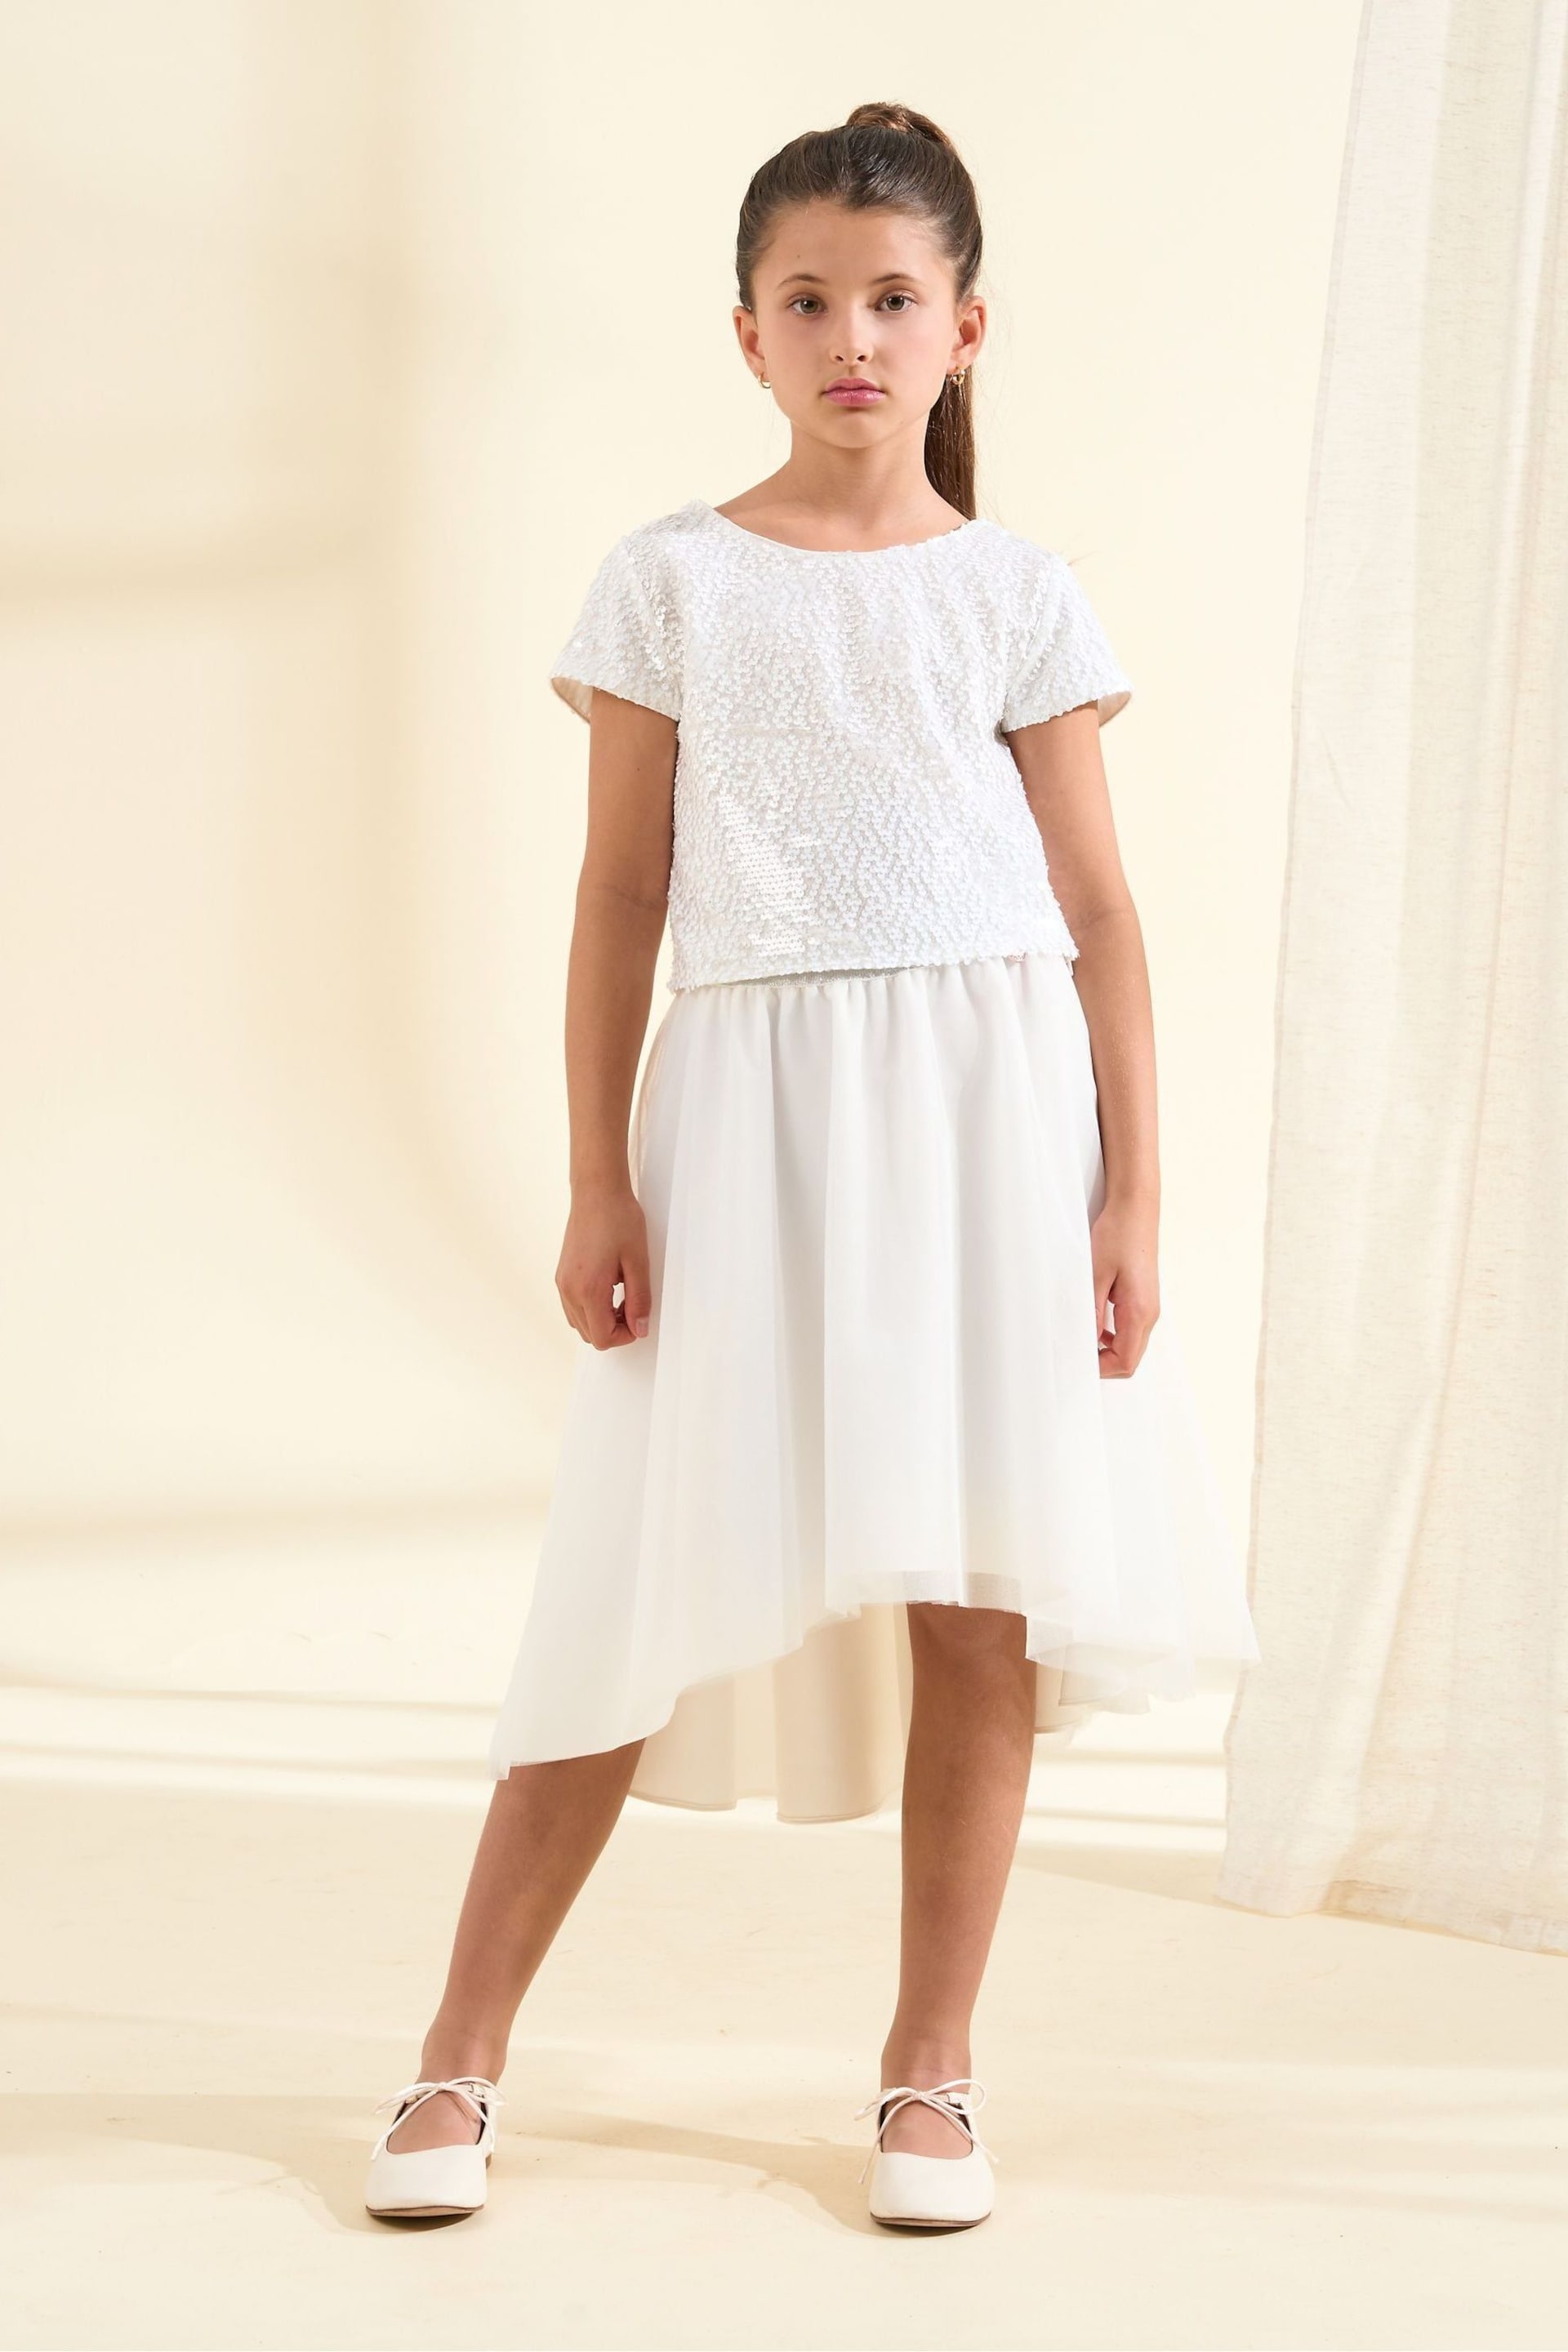 Angel & Rocket White Sequin Leonie Top & Skirt Set - Image 3 of 5